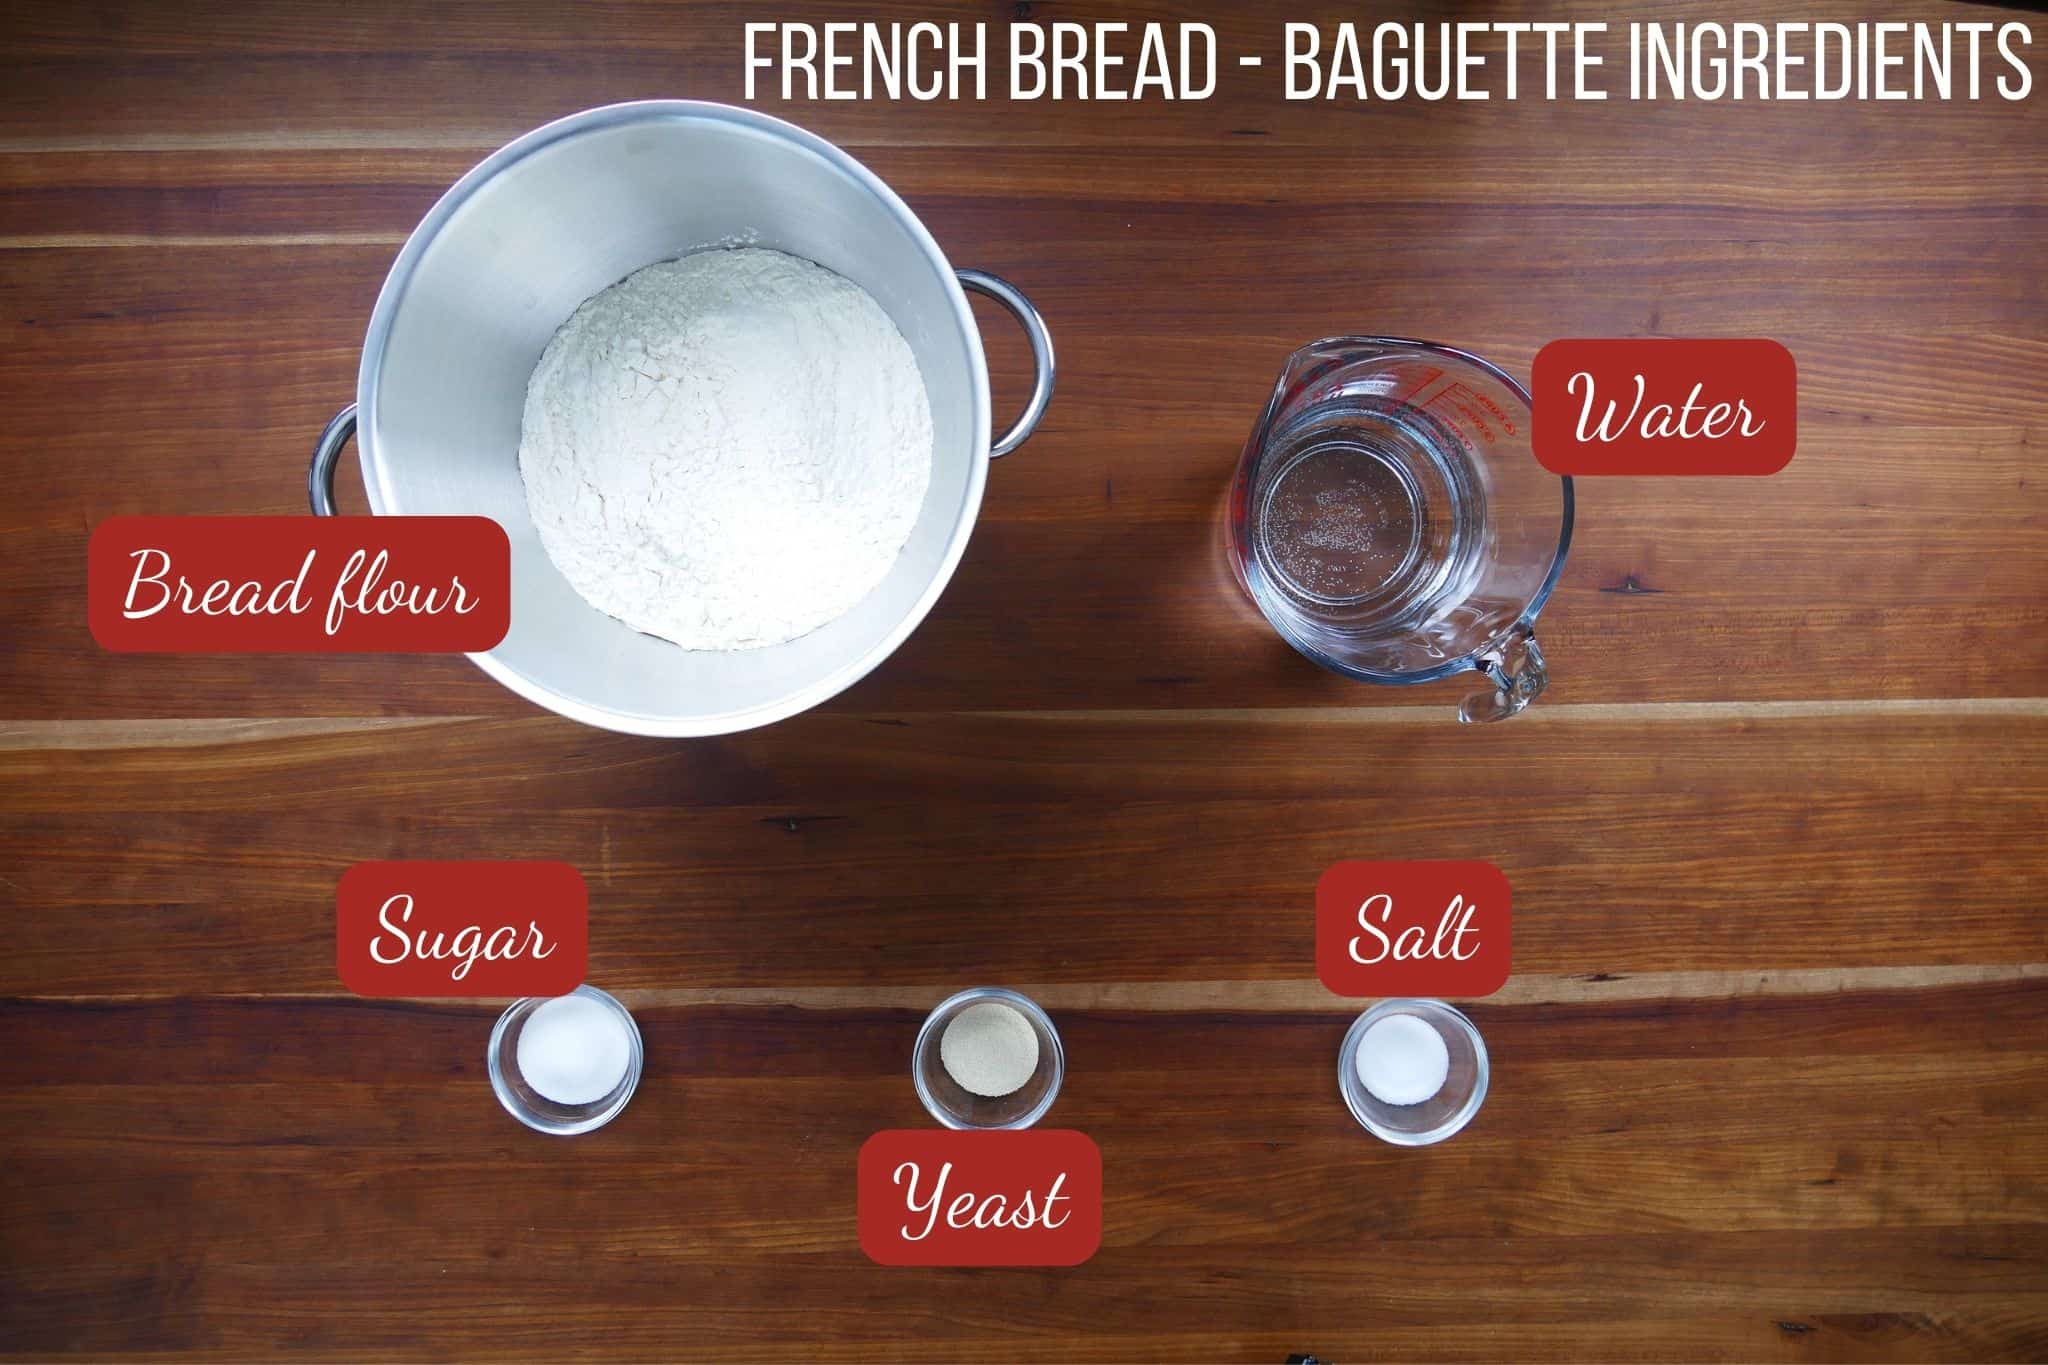 French baguette recipe ingredients - bread flour, water, sugar, yeast, salt